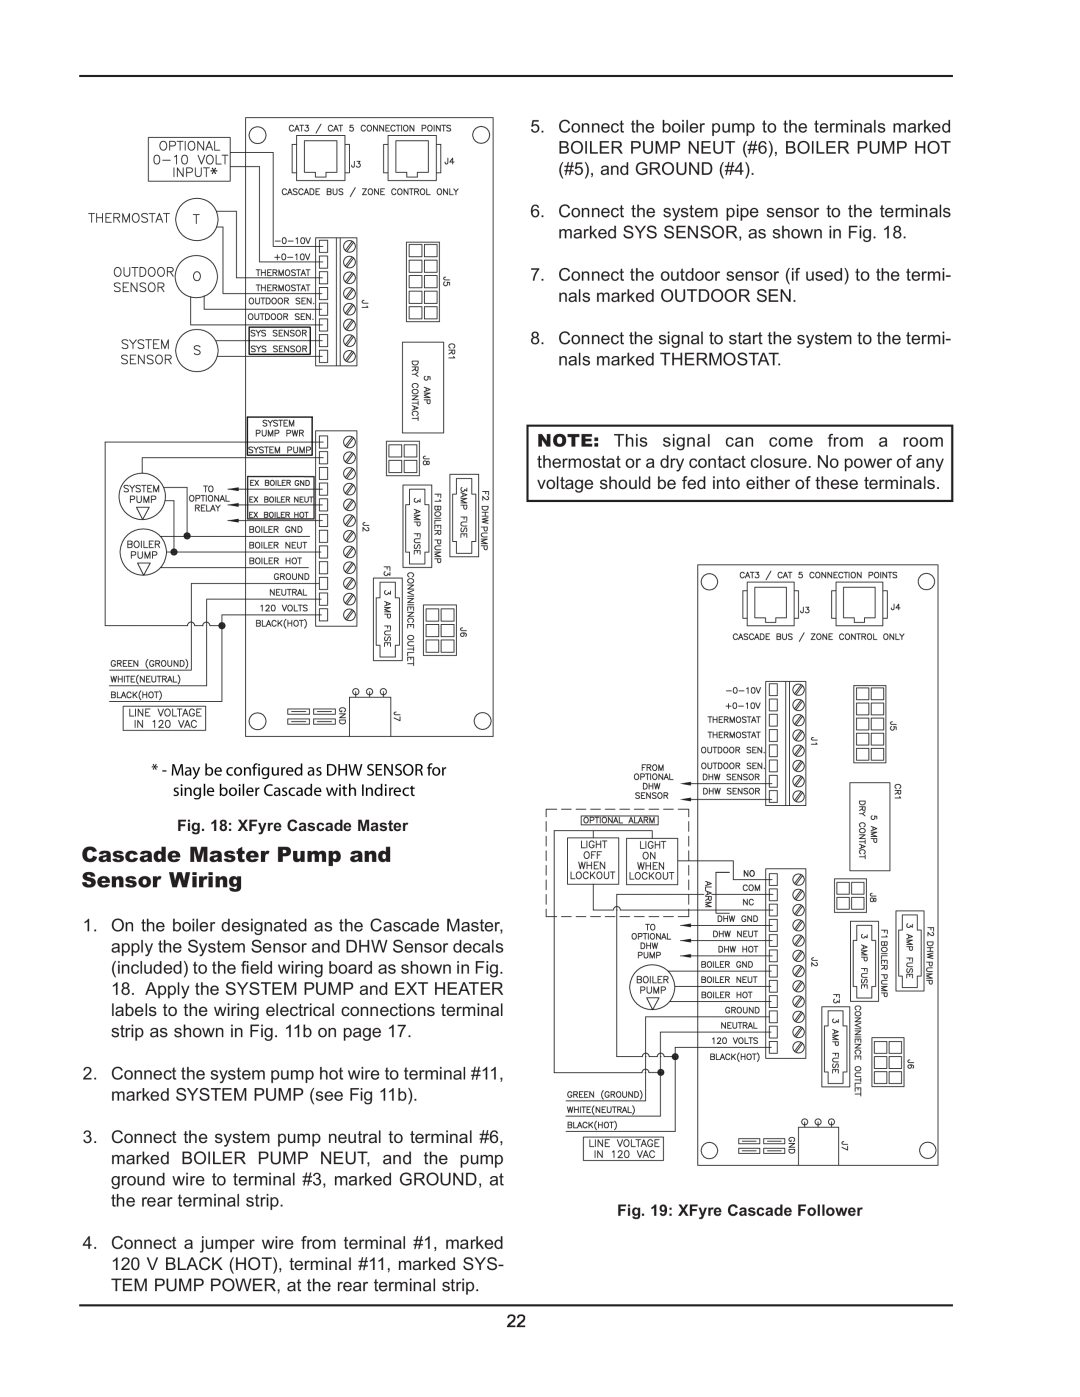 Raypak 850, 300 operating instructions Cascade Master Pump and Sensor Wiring 